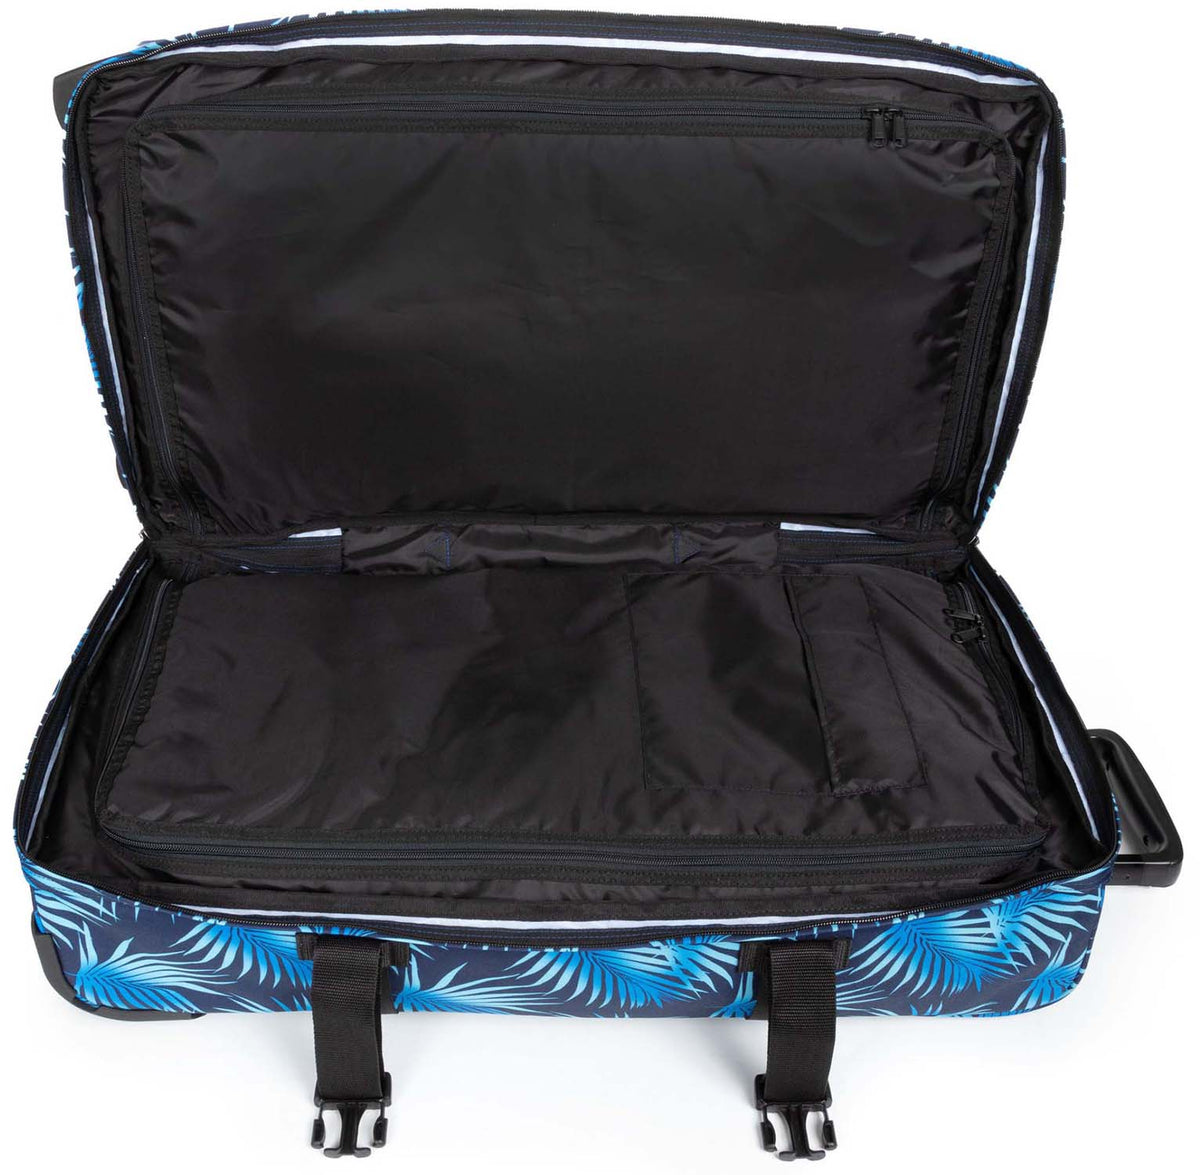 Eastpak Tranverz M Suitcase - Brize Navy Grade